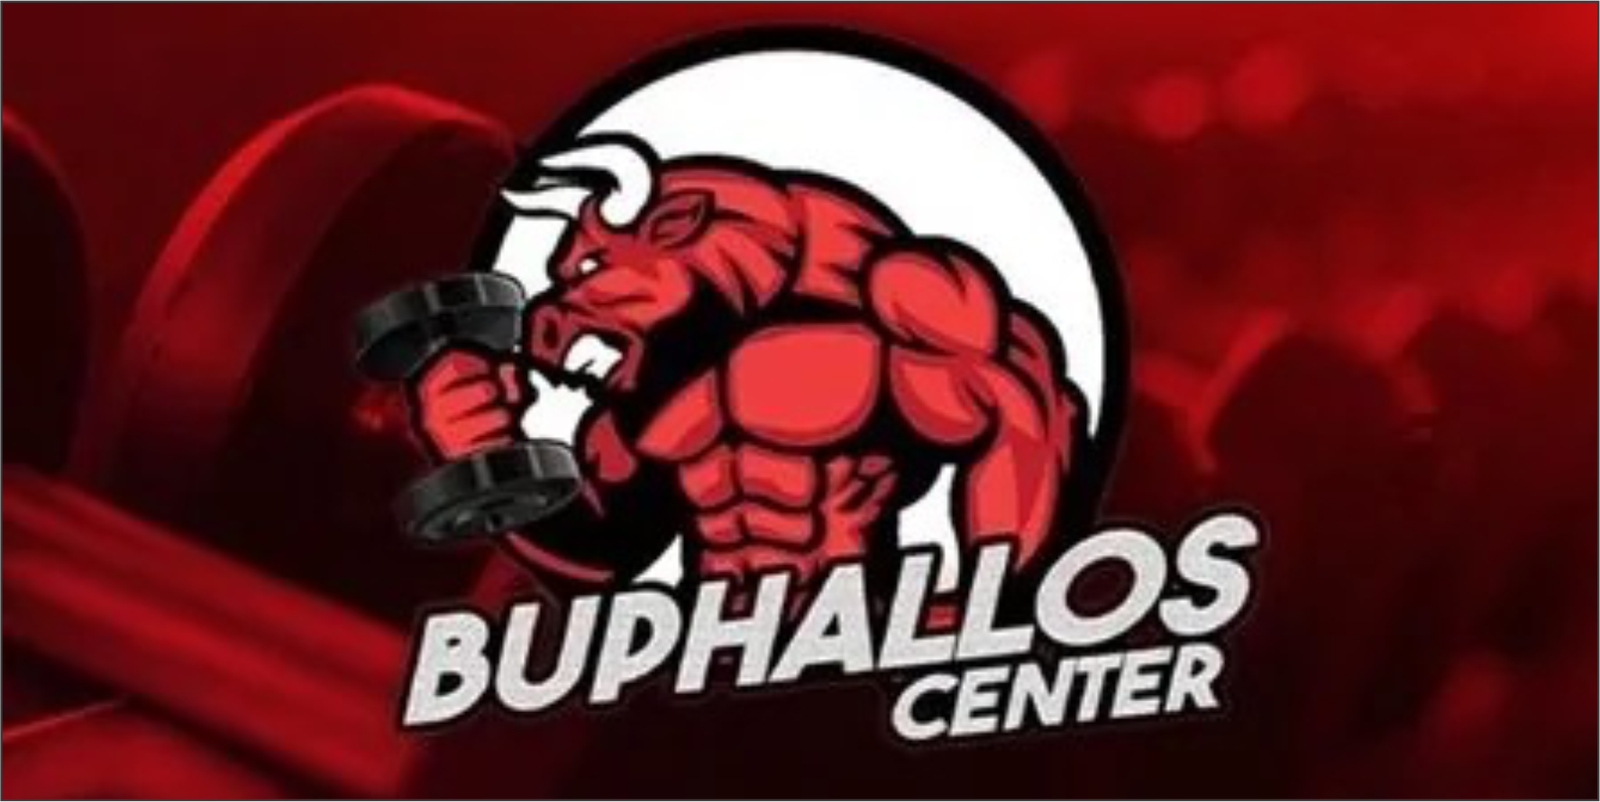 Buphallos Center